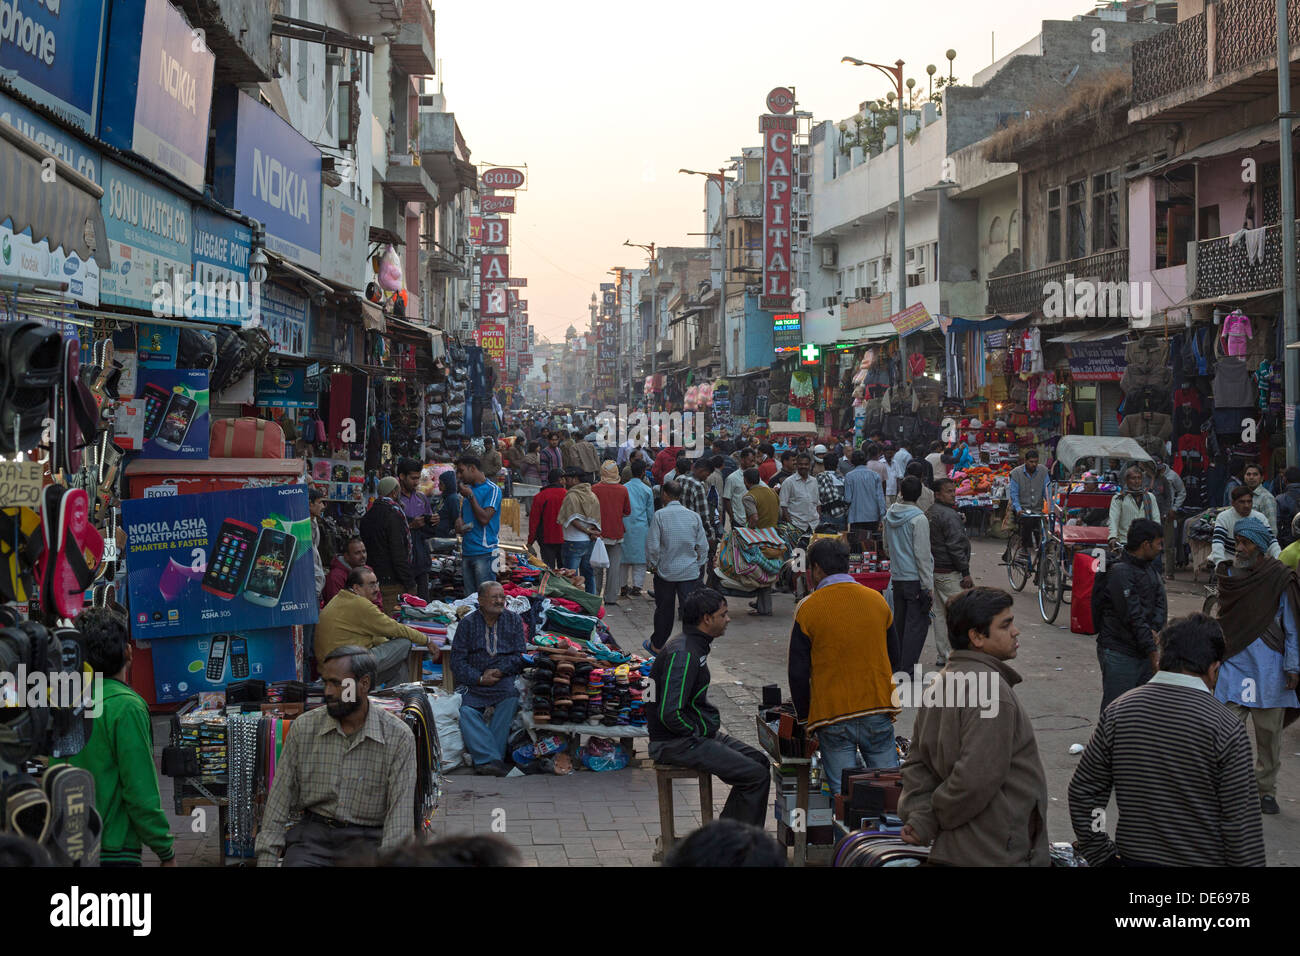 L'Inde, Uttar Pradesh, Delhi, scène de rue typique à proximité de la gare ferroviaire de New Delhi dans le quartier de Paharganj Banque D'Images